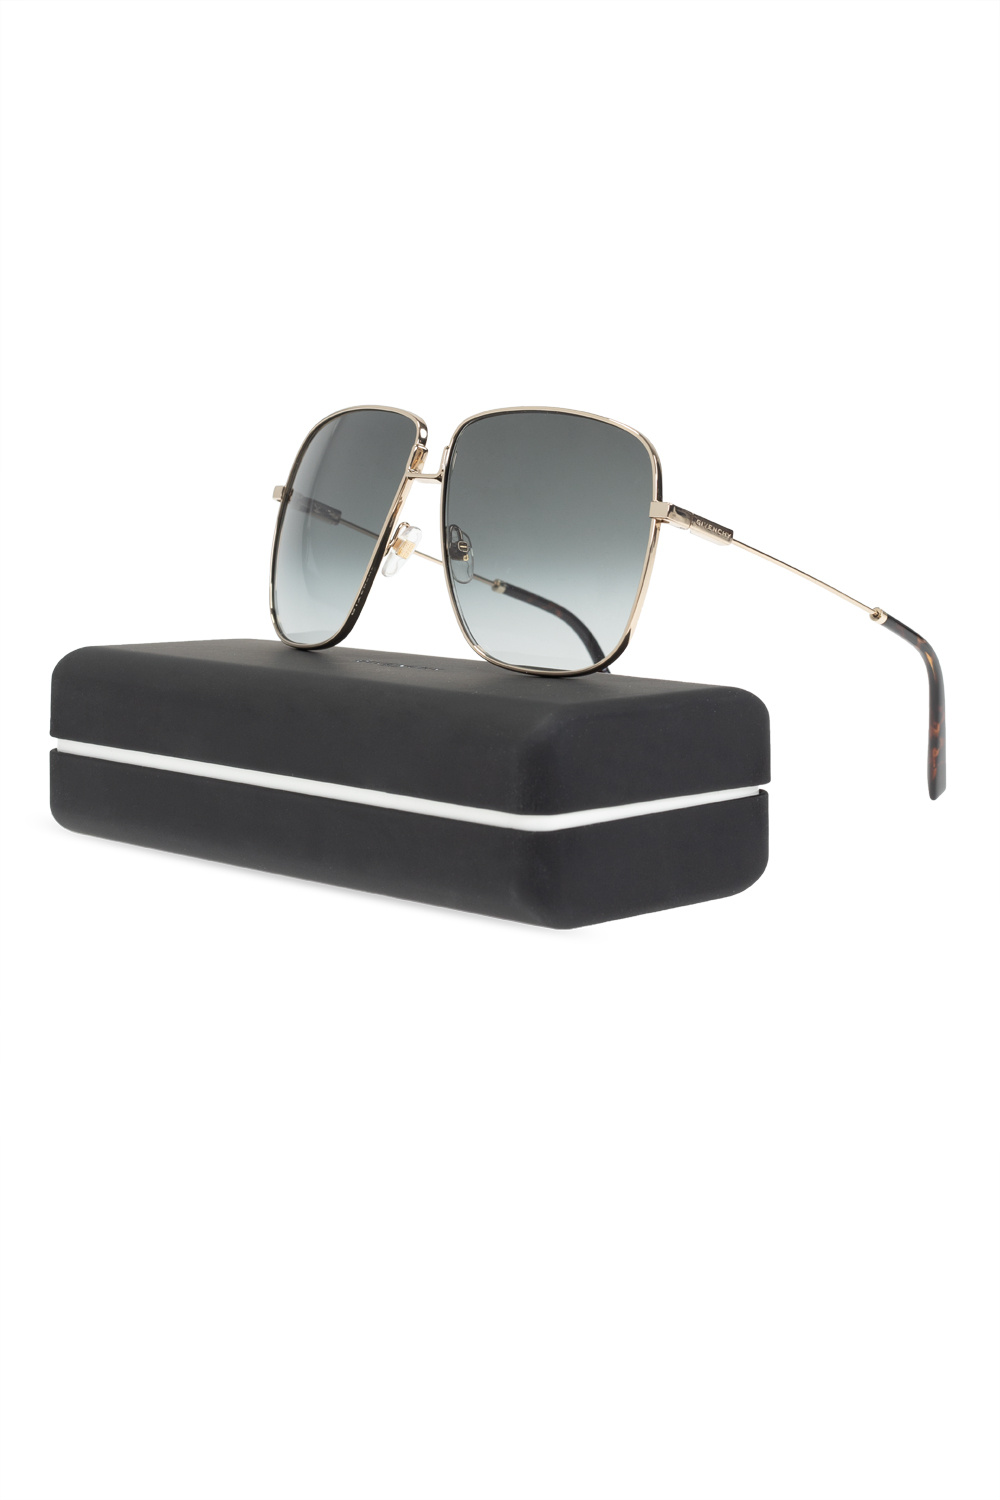 Givenchy Tortoiseshell square lens sunglasses from Cutler & Gross